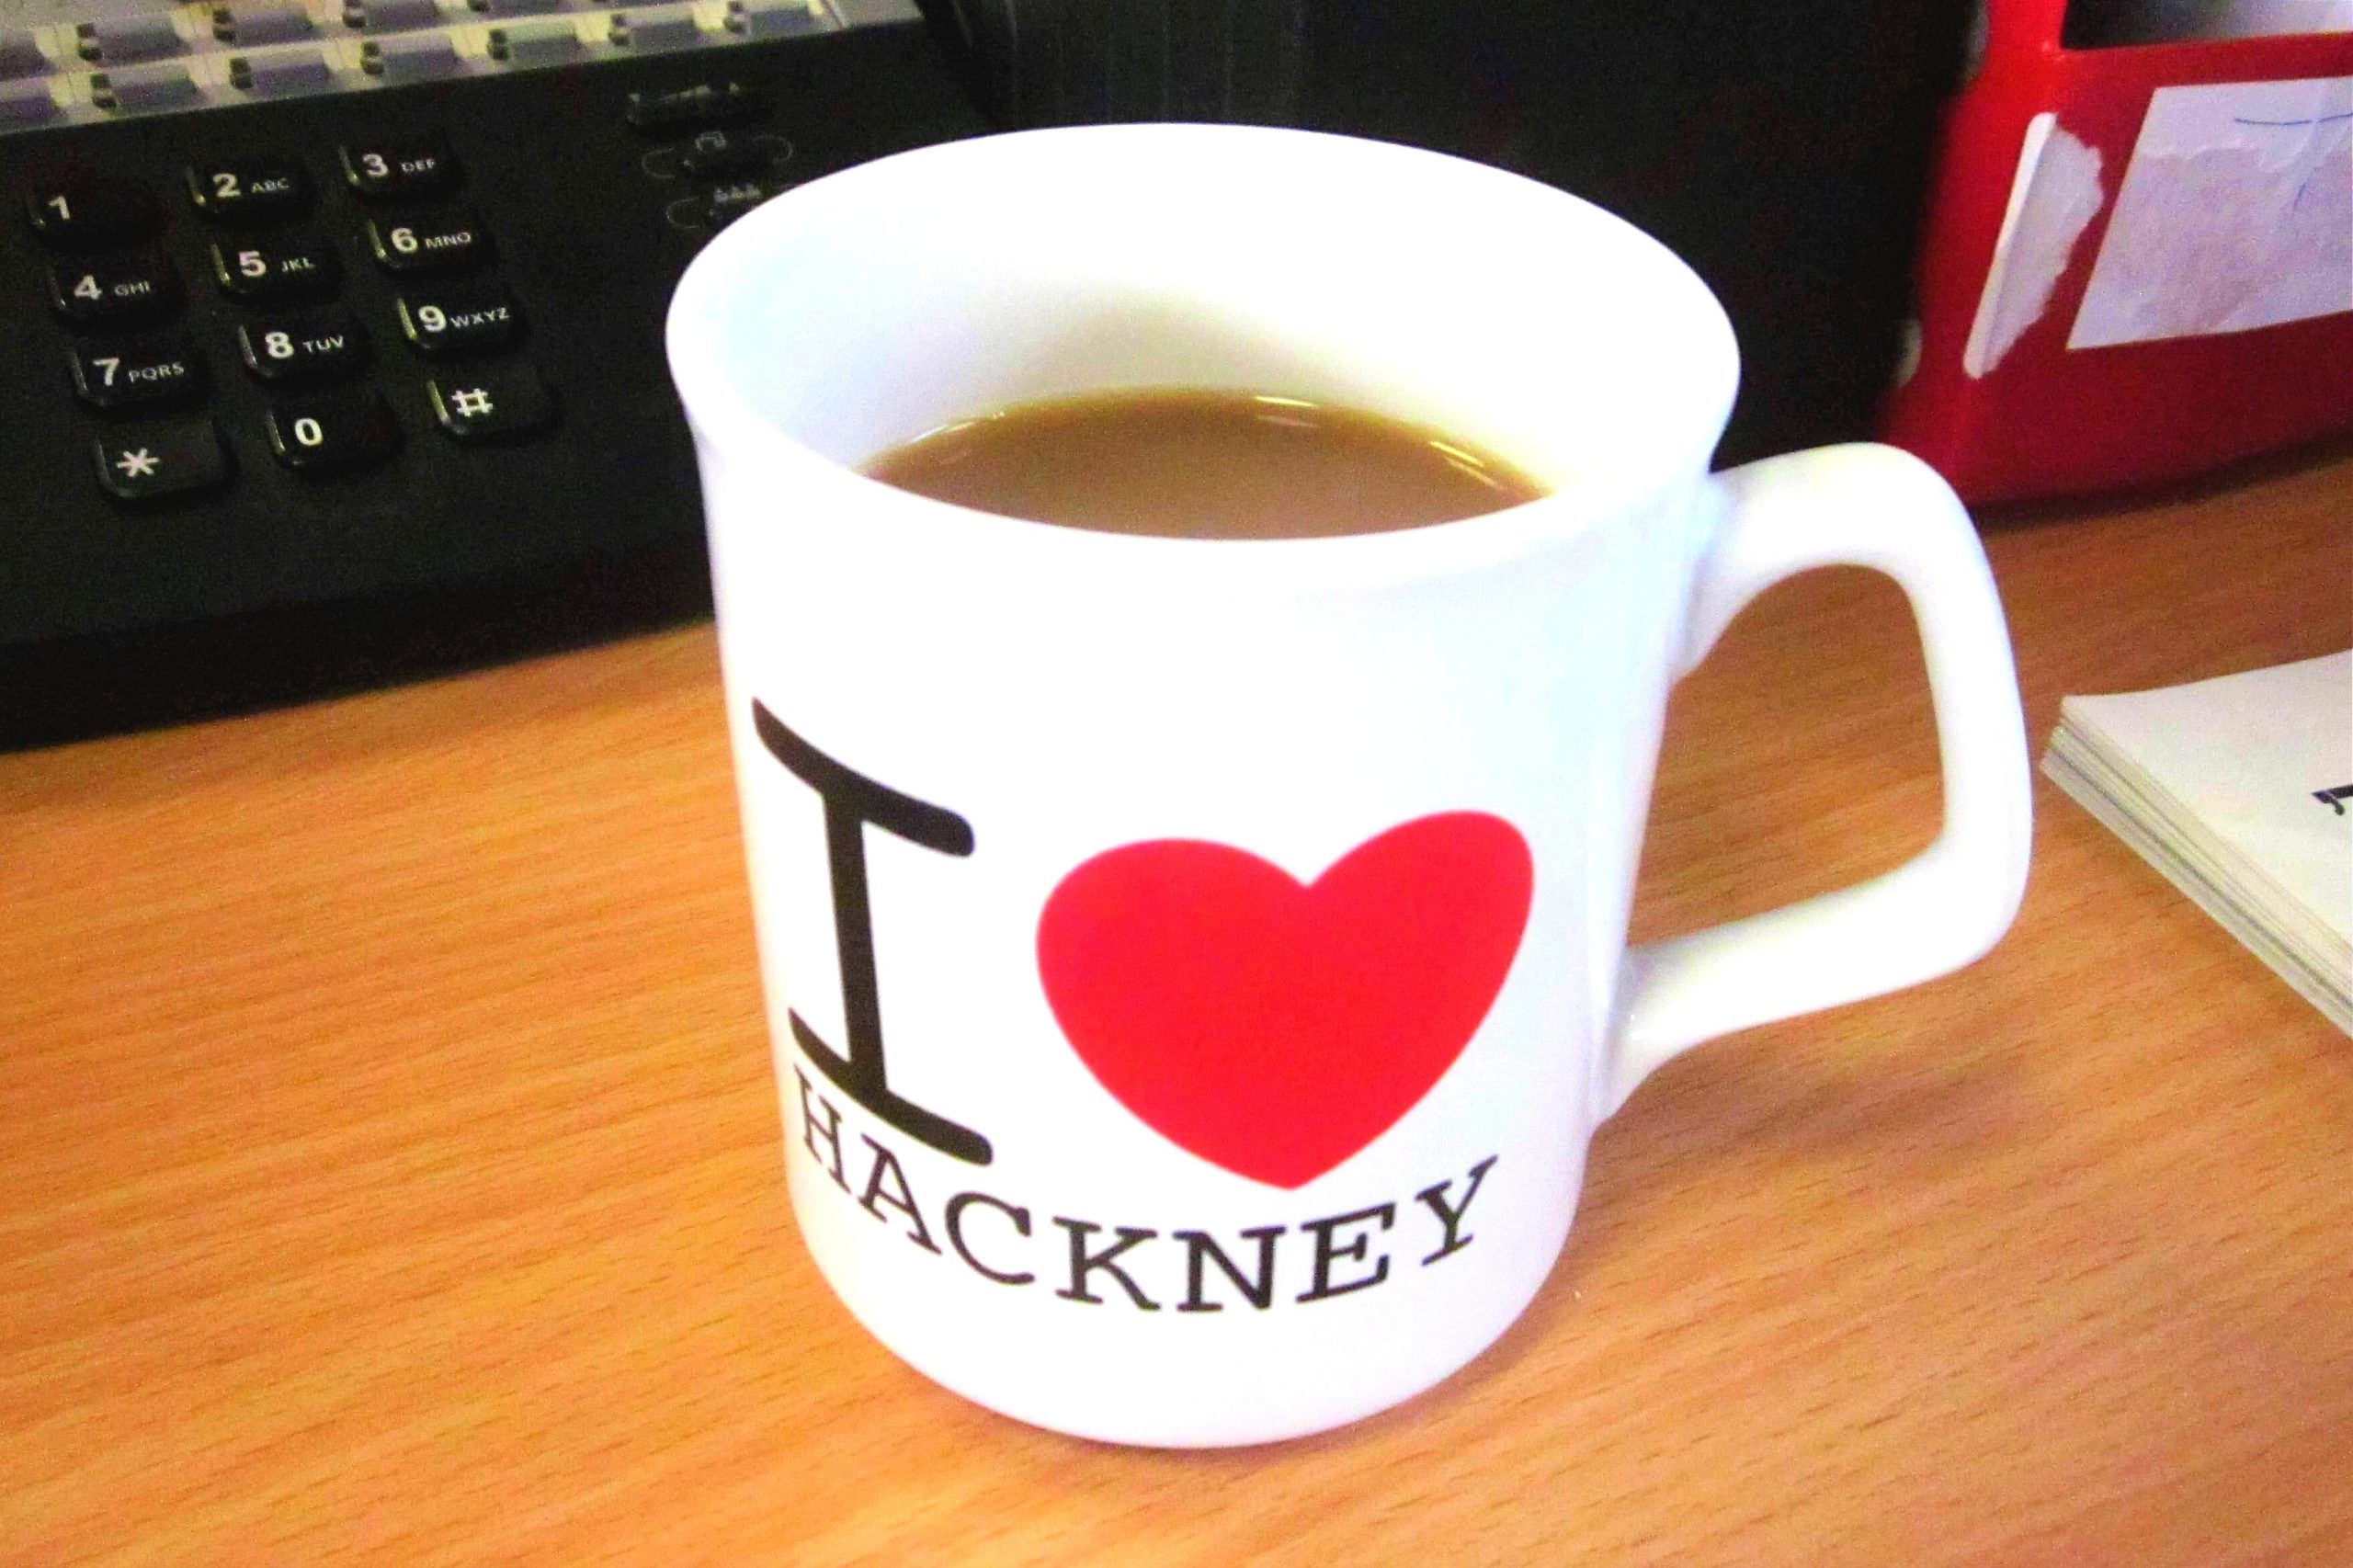 I love Hackney coffee morning